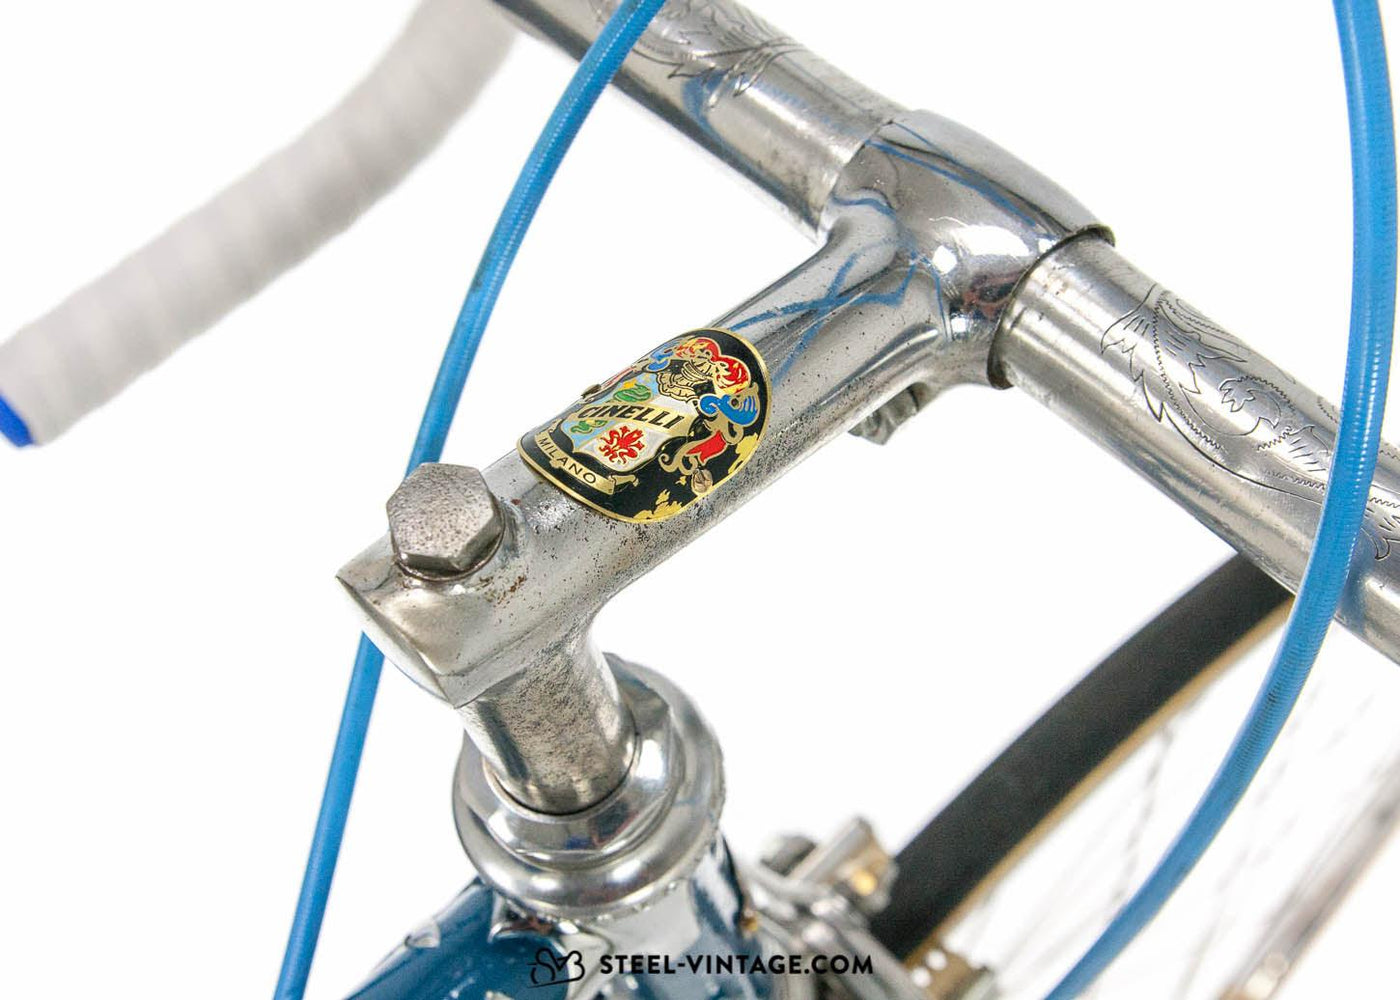 Gloria Garibaldina Extra Rare Road Bike 1950s - Steel Vintage Bikes